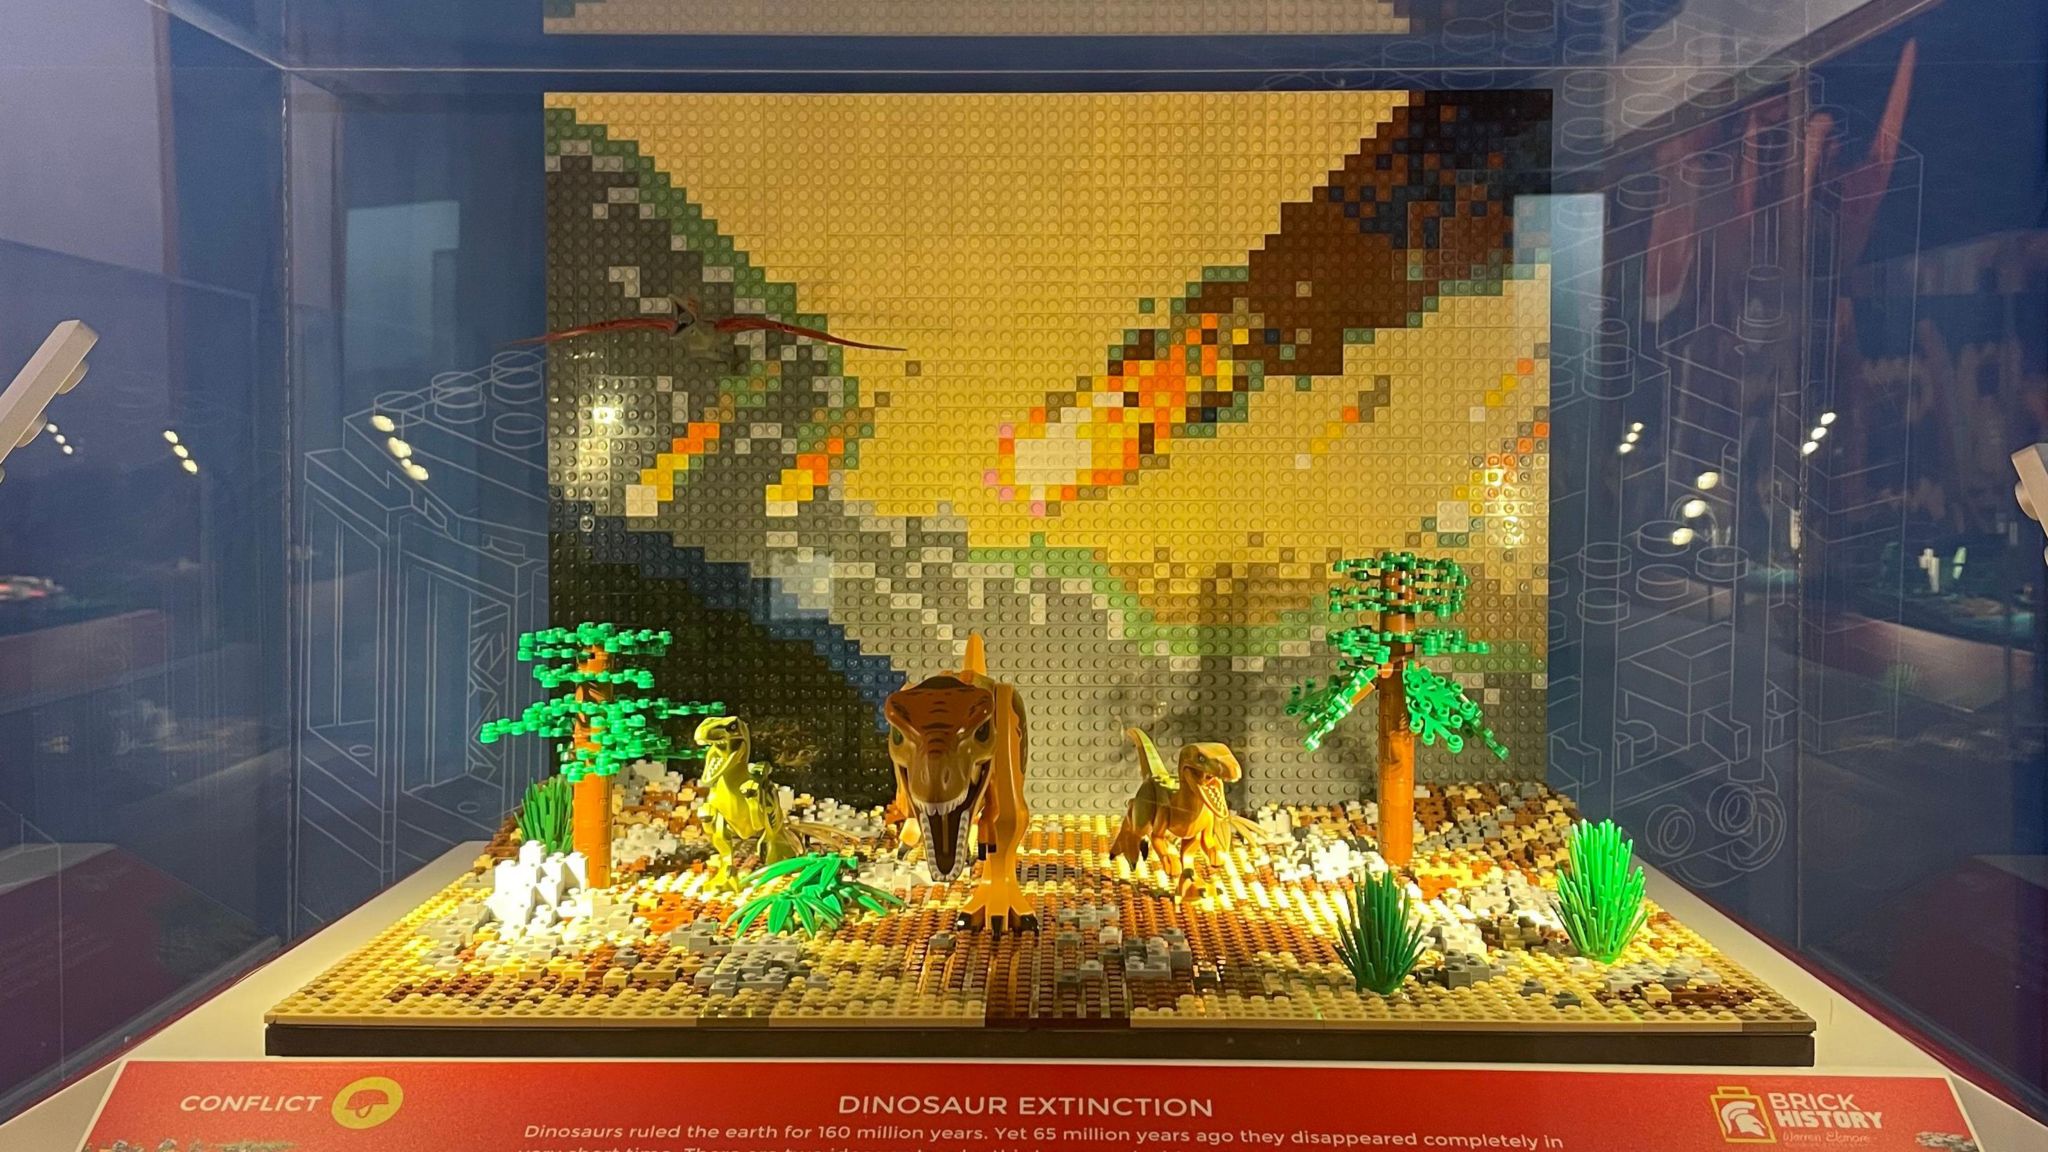 Dinosaur extinction depicted out of Lego bricks